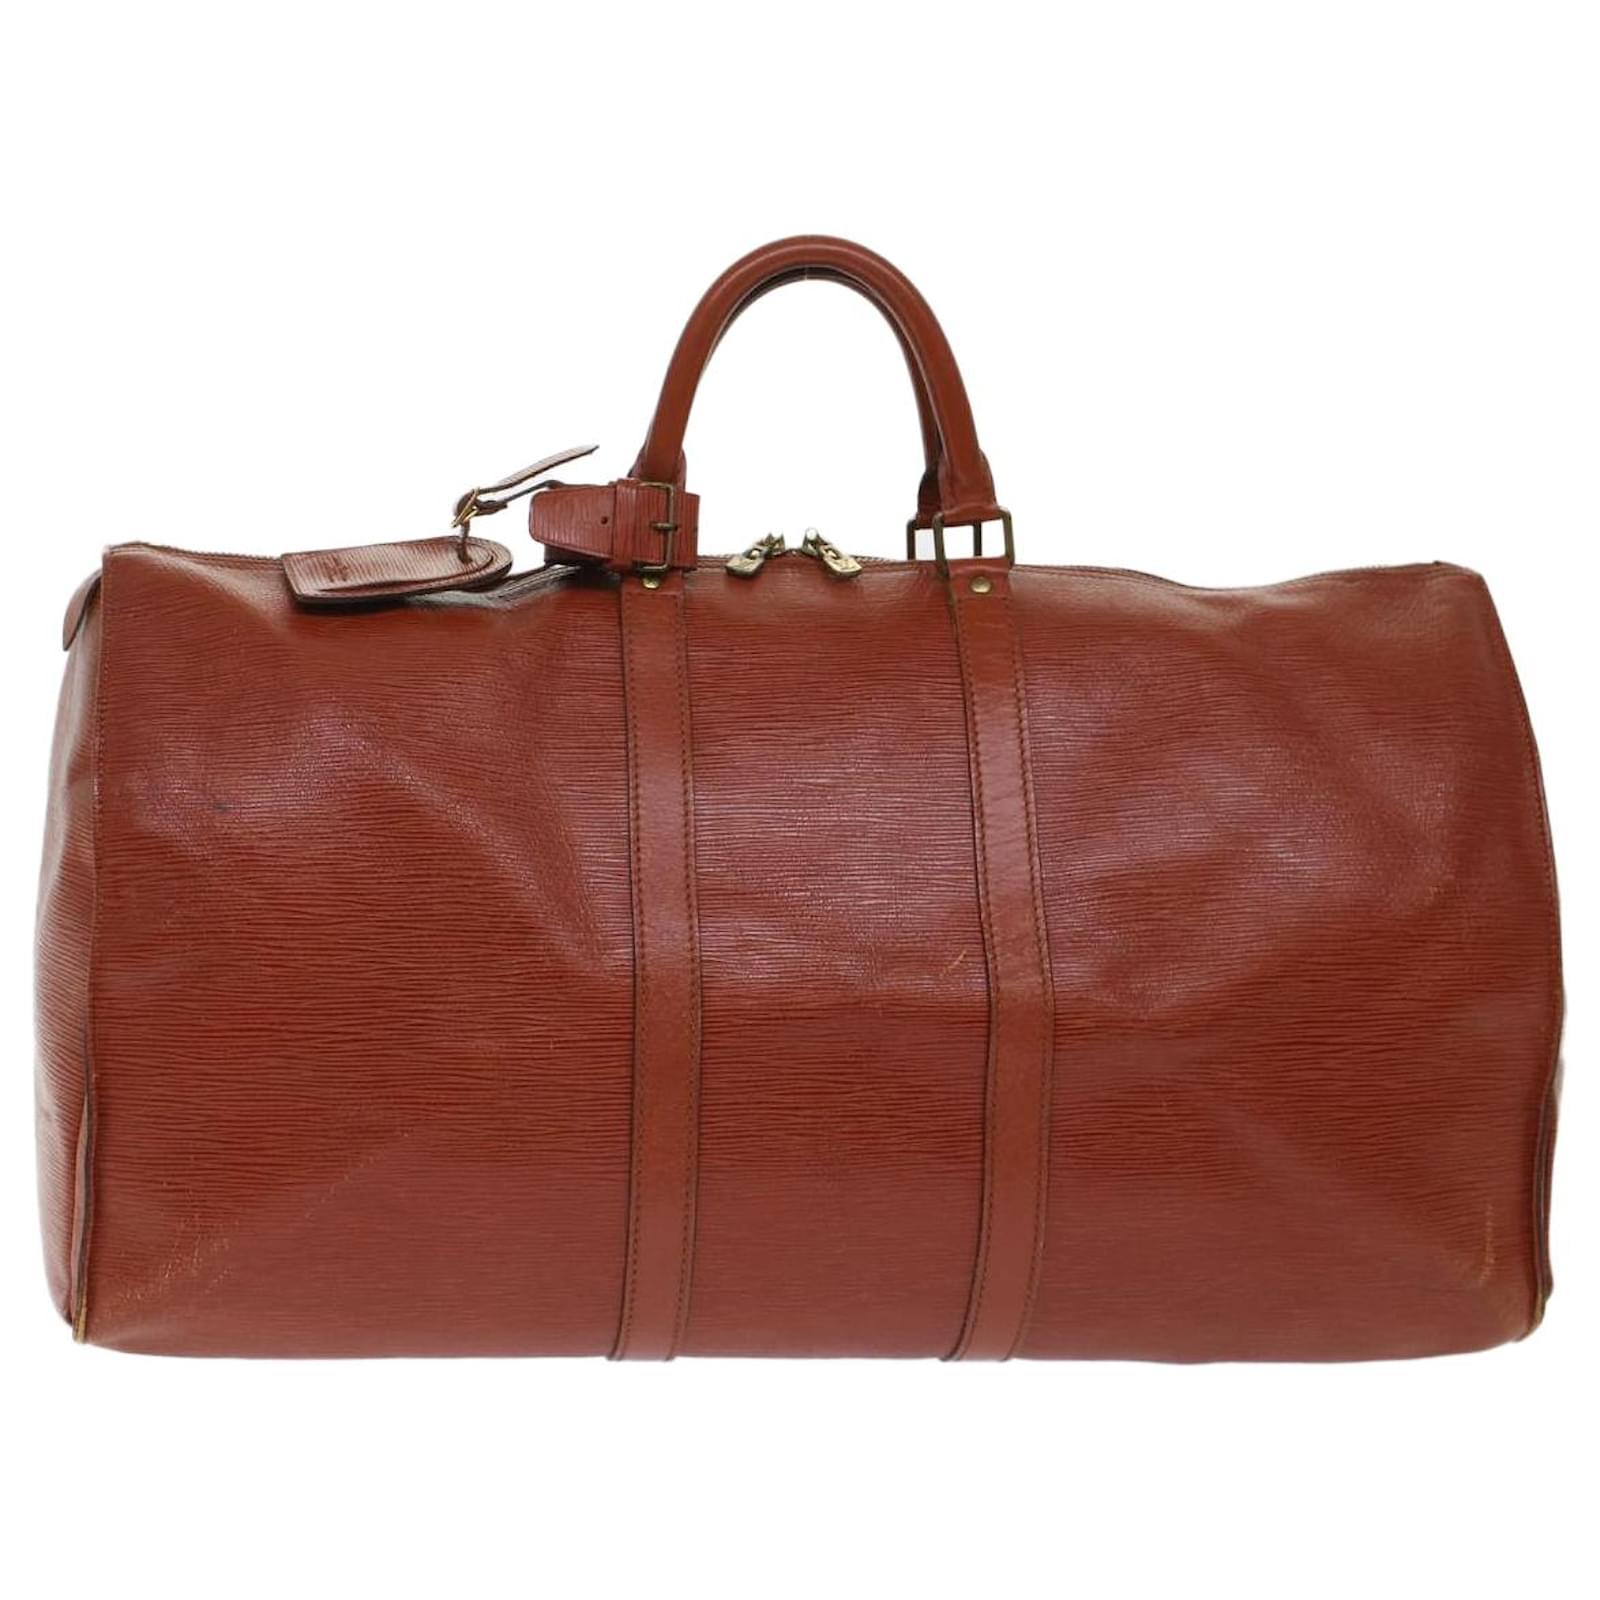 Louis Vuitton Blue Epi Leather Keepall 55 cm Duffle Bag Luggage